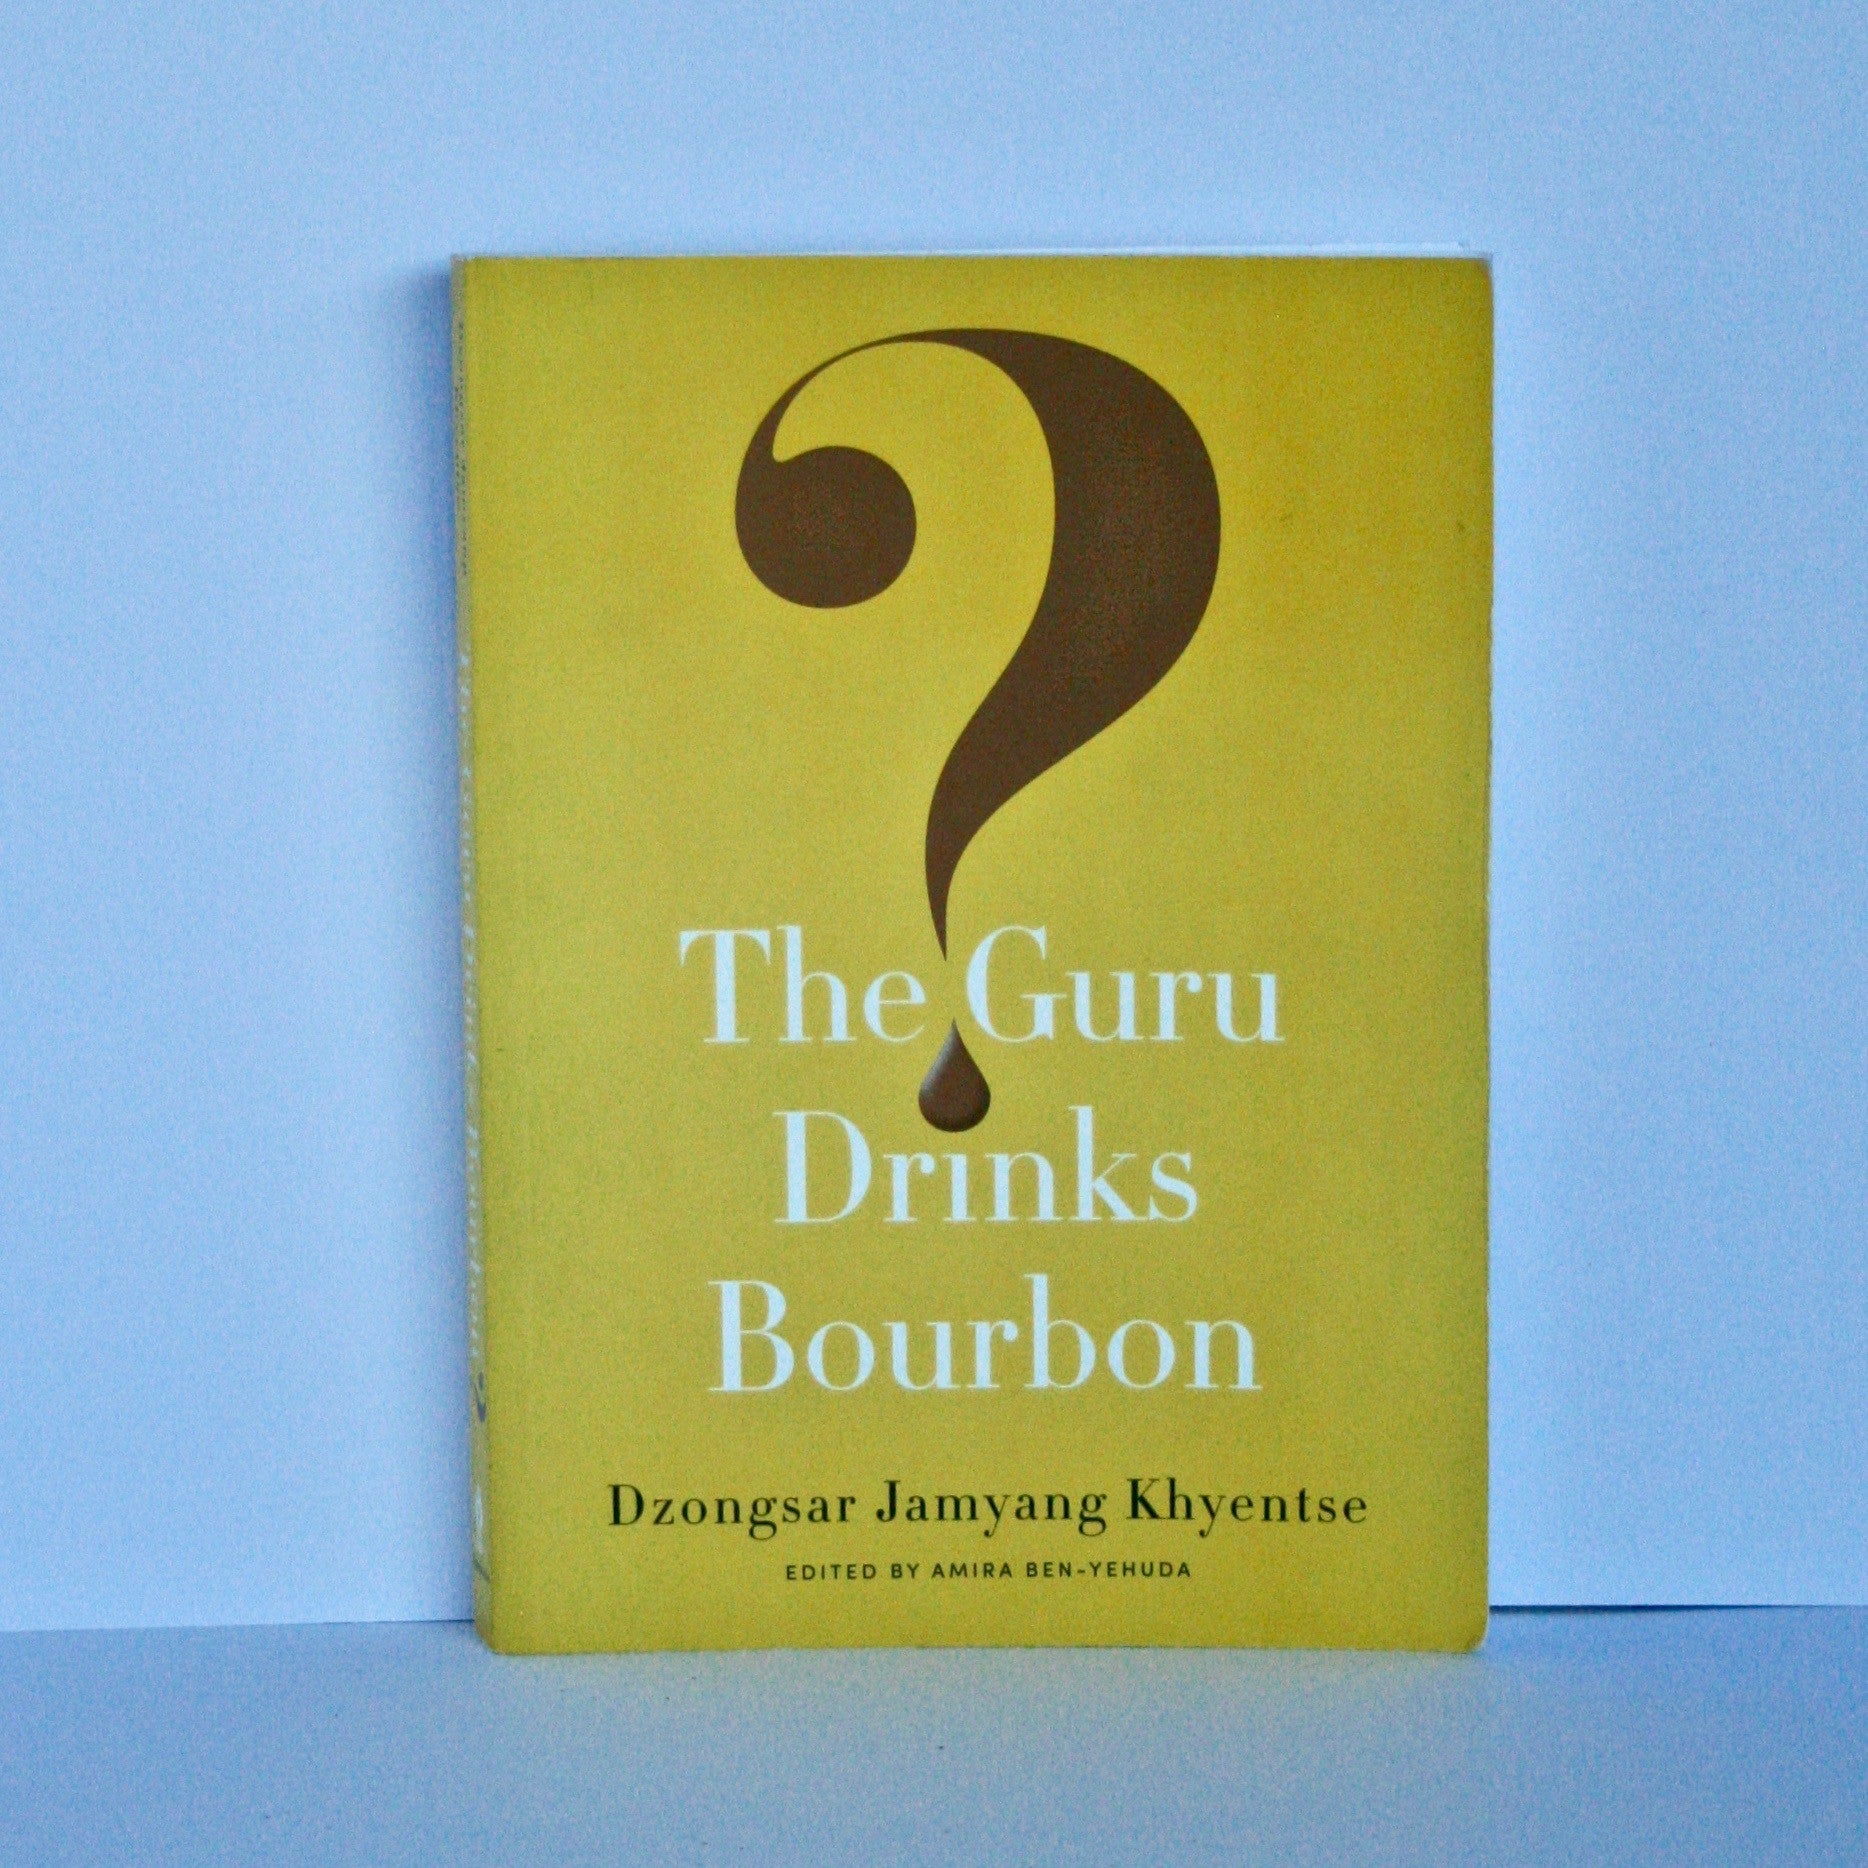 Guru Drinks Bourbon by Dzongsar Jamyang Khyentse